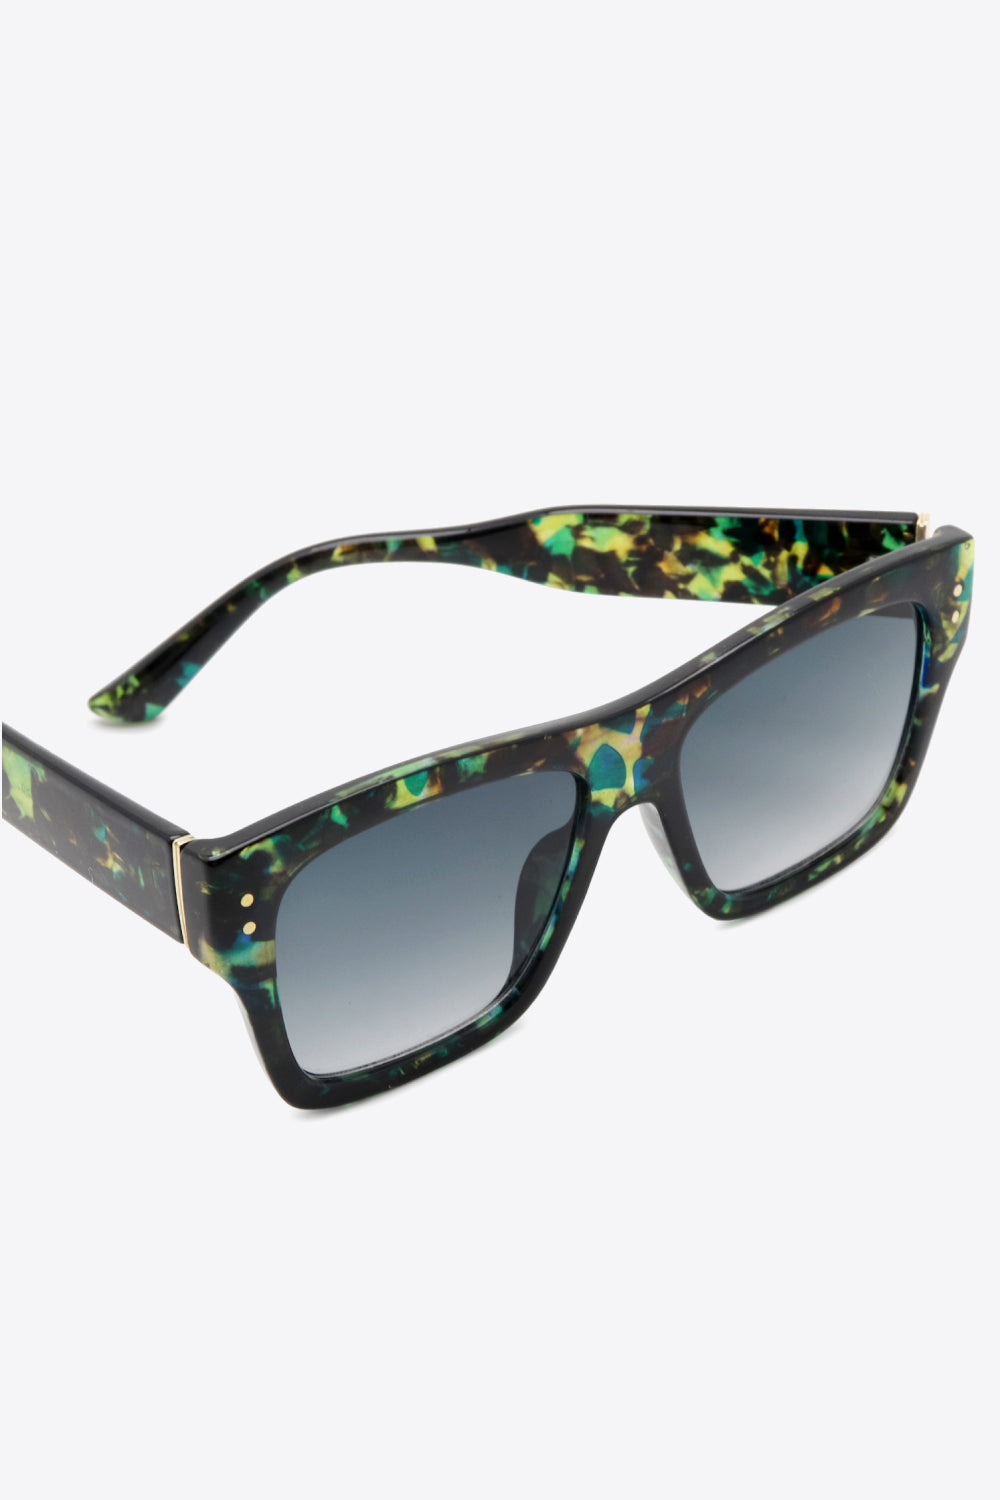 UV400 Patterned Polycarbonate Square Sunglasses - BEAUTY COSMOTICS SHOP